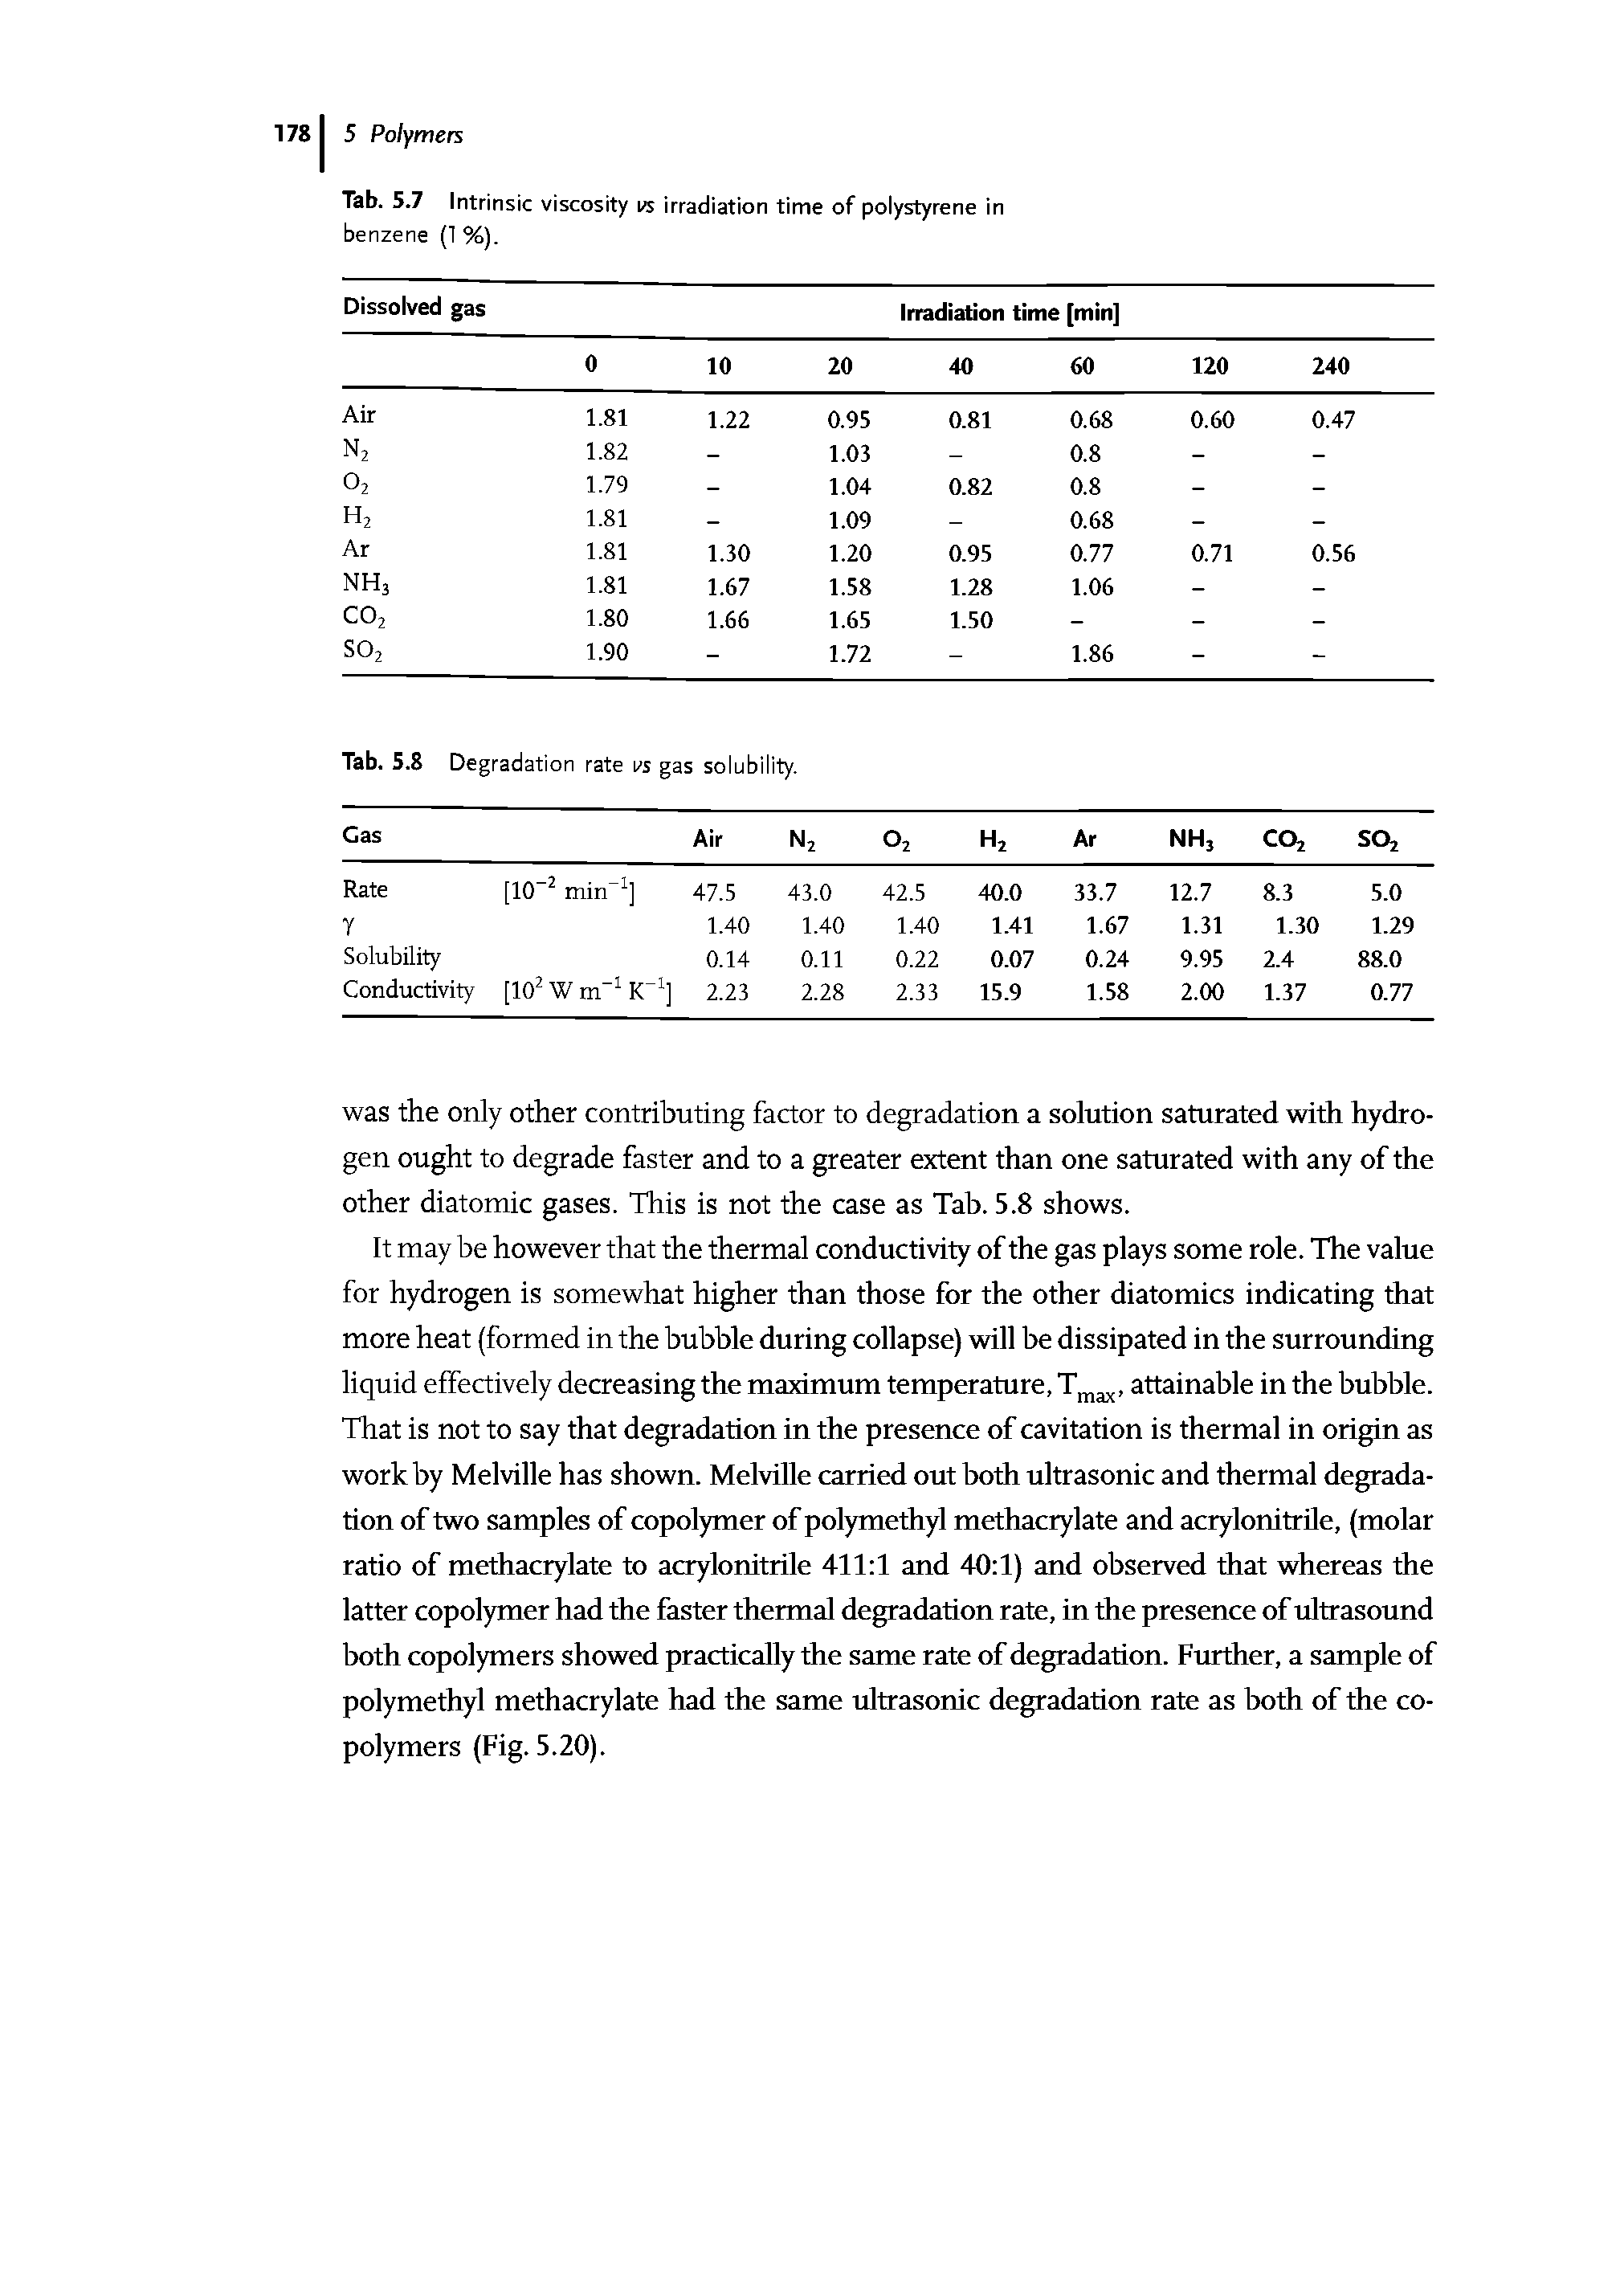 Tab. 5.7 Intrinsic viscosity vs irradiation time of polystyrene in benzene (1 %).